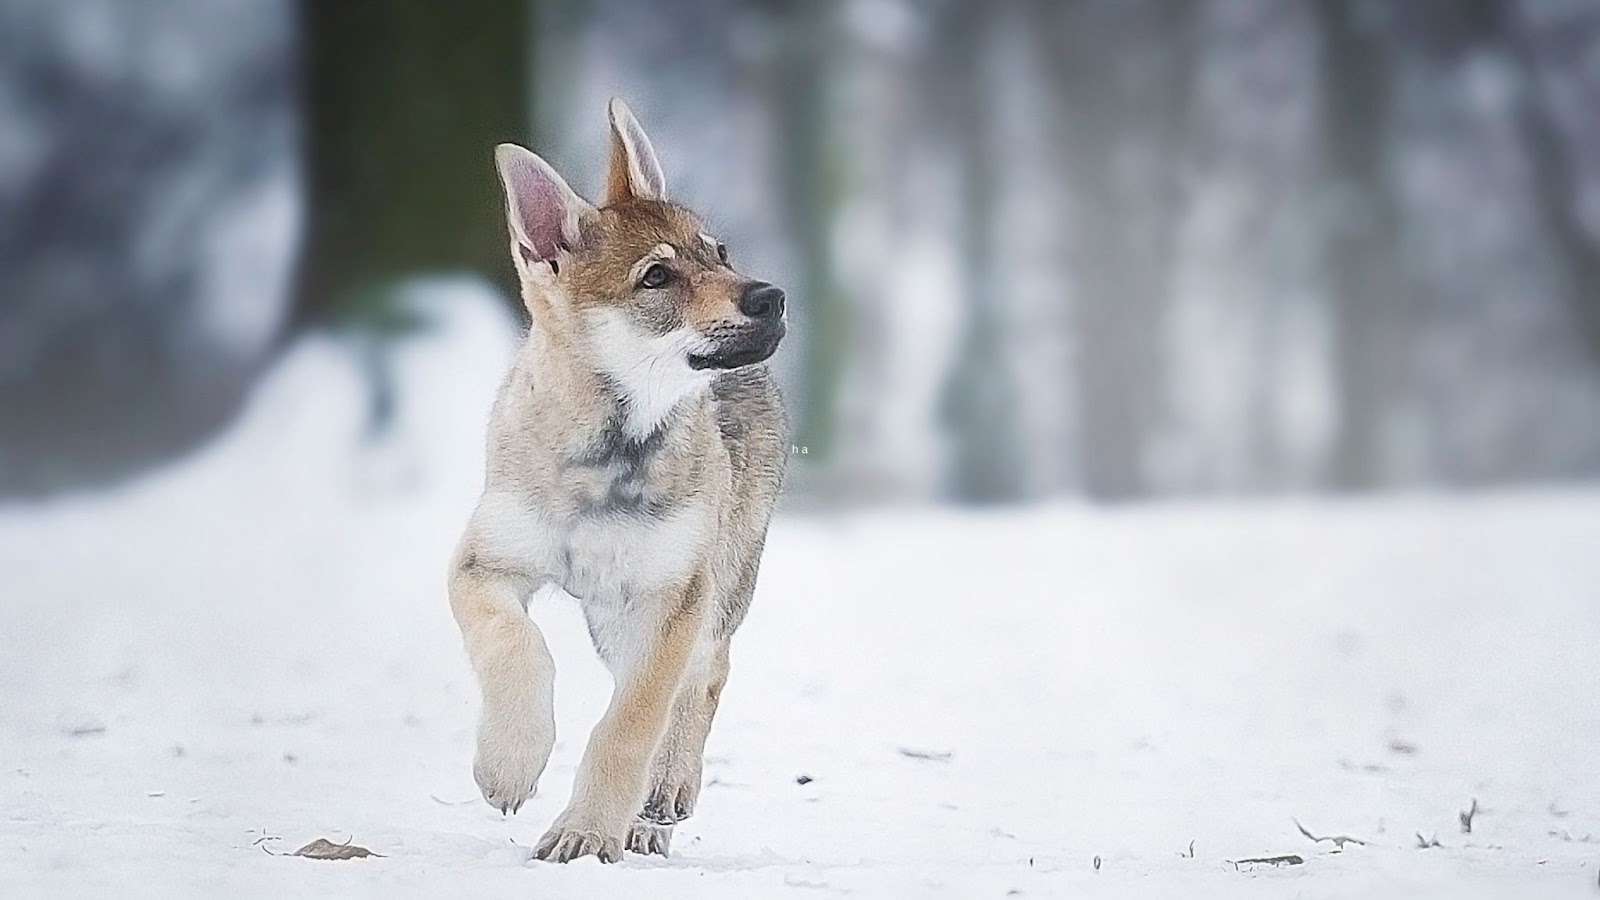 Young Vlcak puppy running in snow in winter